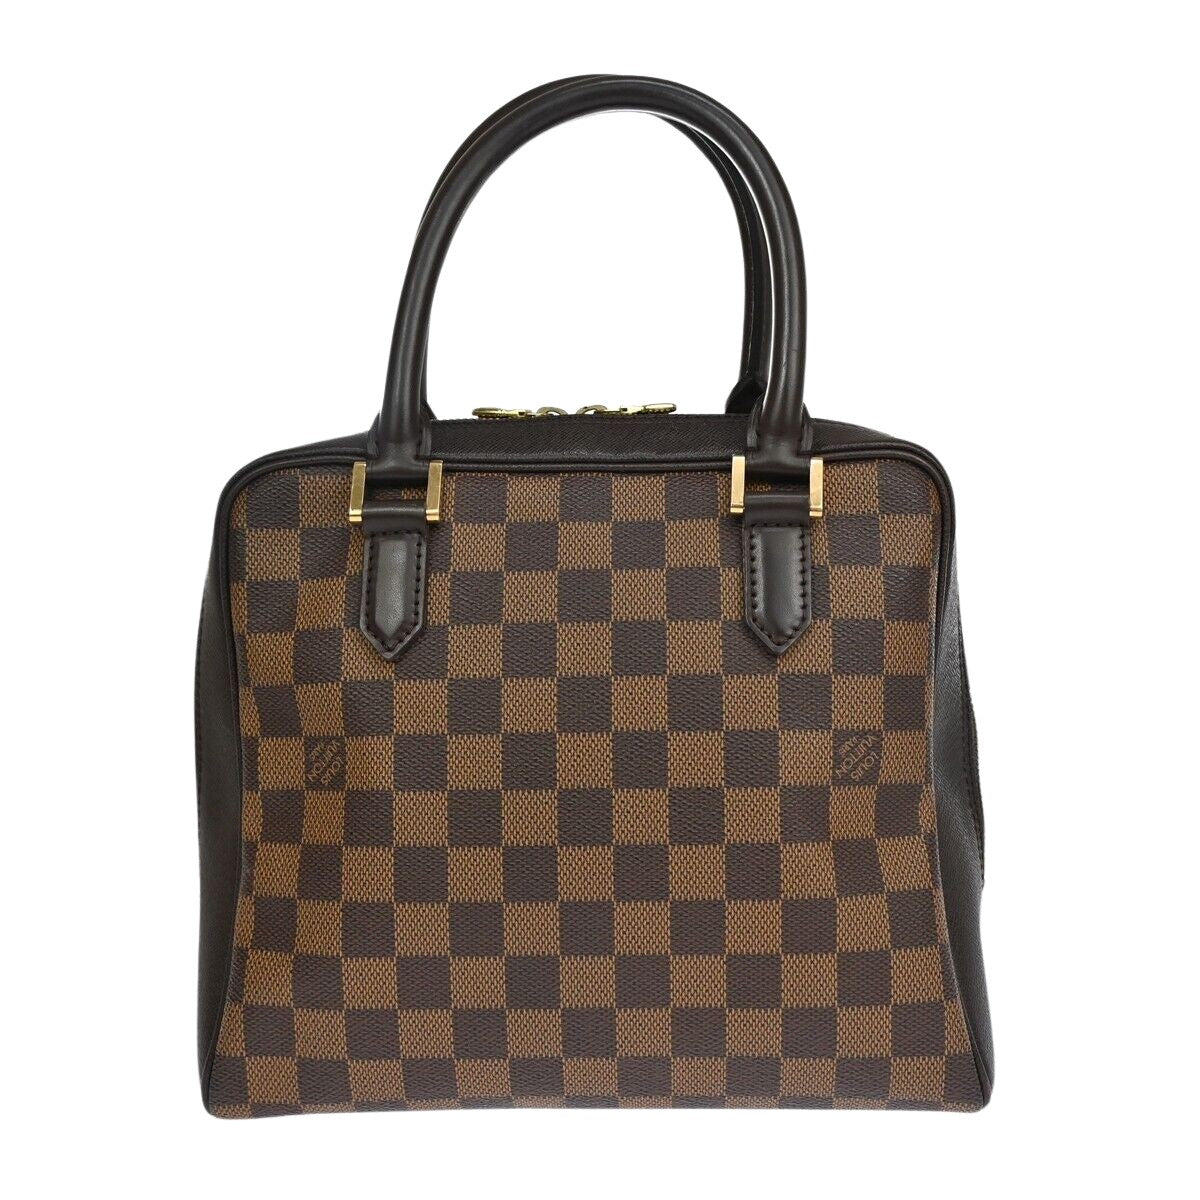 Pre-Owned Louis Vuitton Brera Damier Ebene Handbag - Excellent Condition 